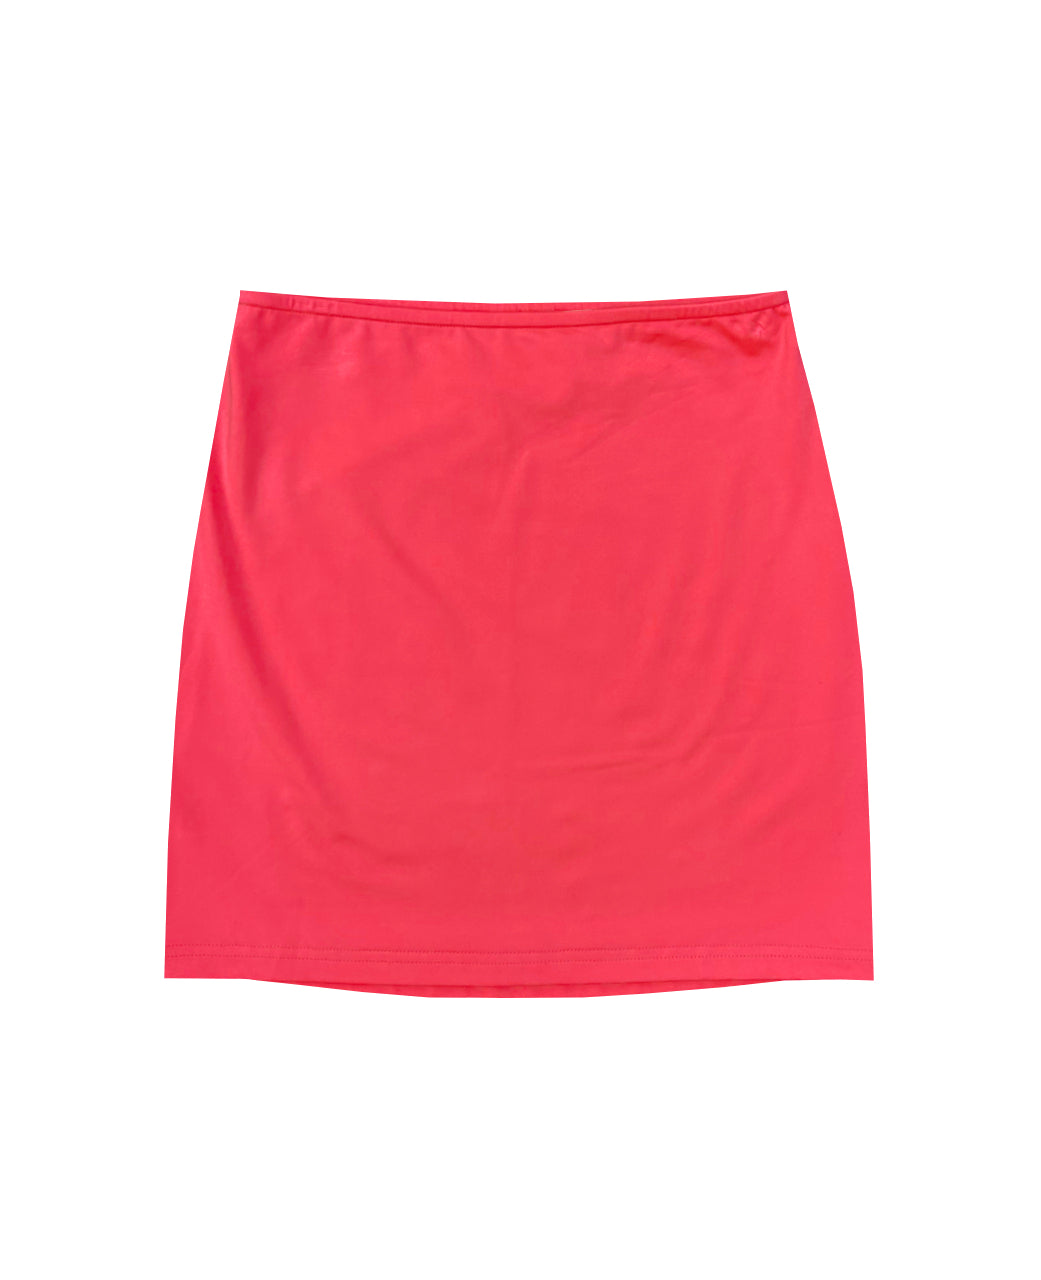 Katiej NYC - Women - Neon Pink Gigi Skirt